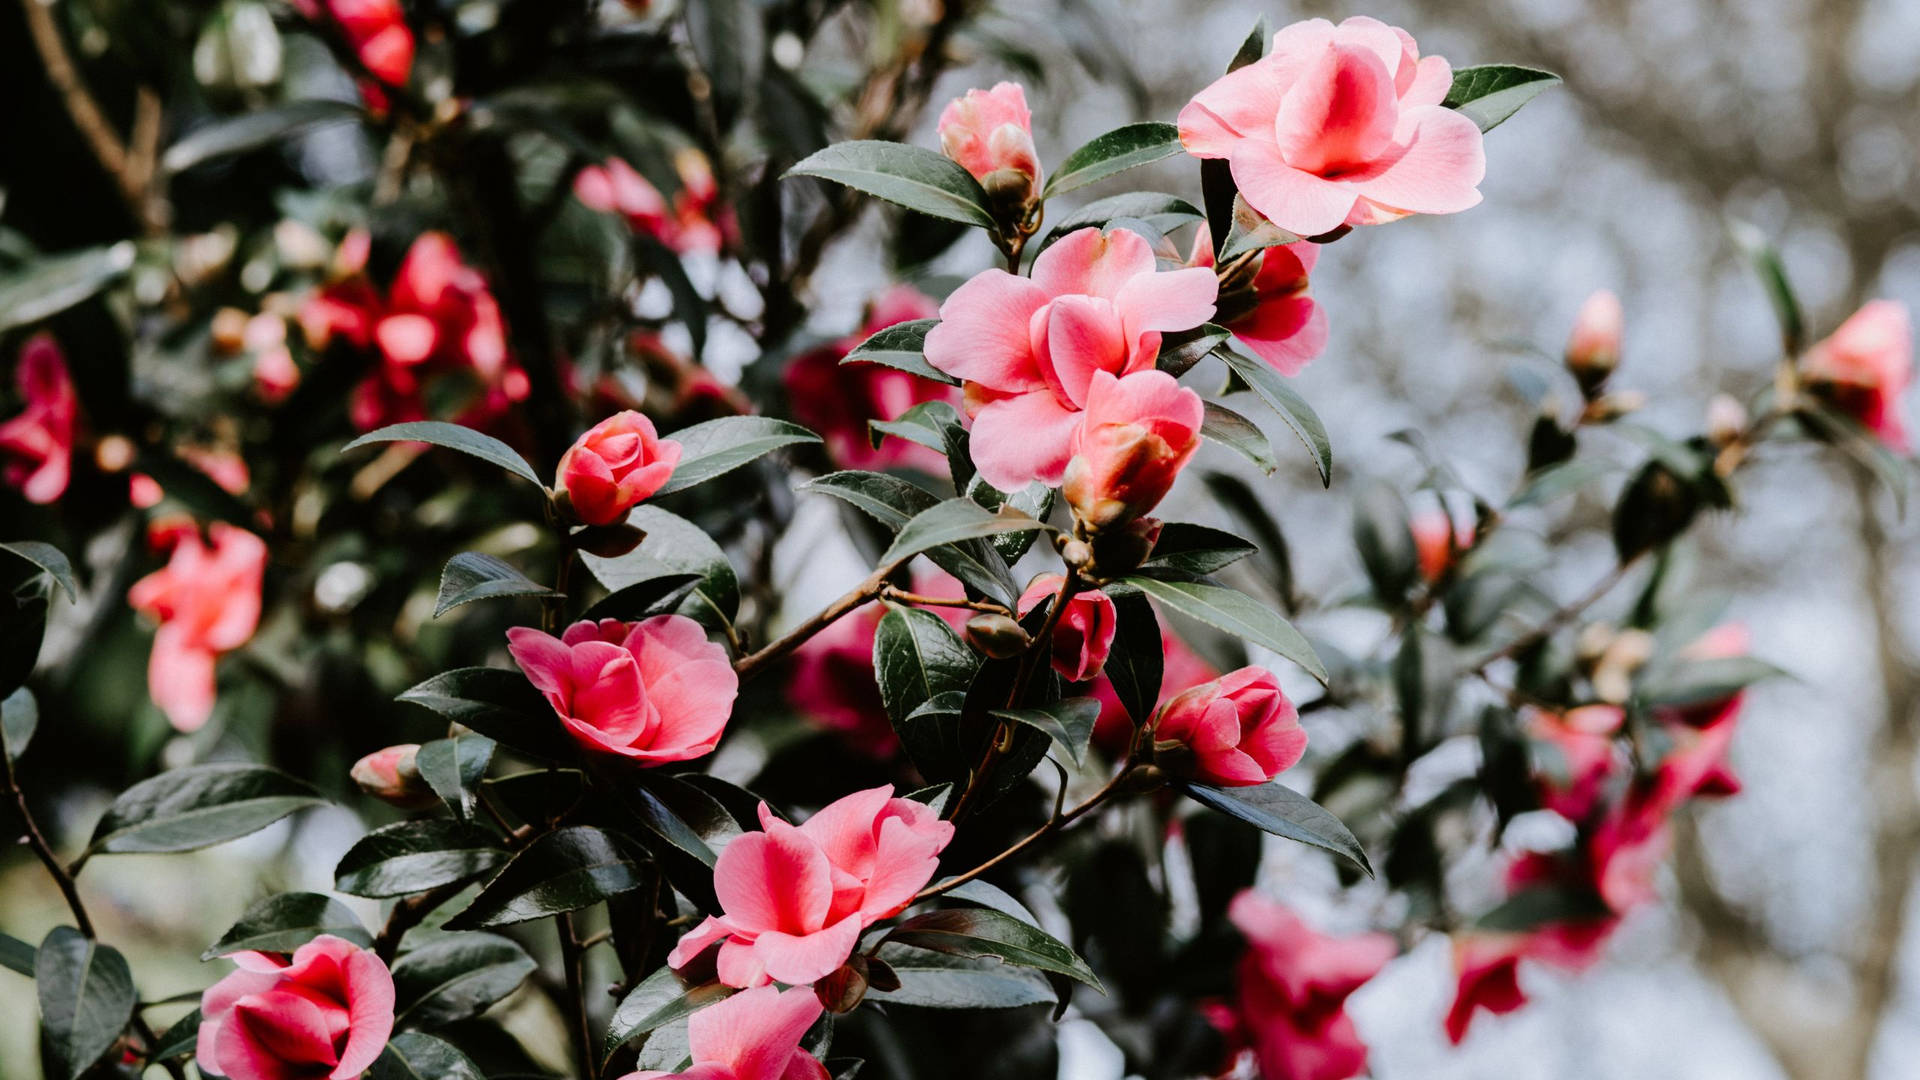 Stunning Blooms Of Camellia Sasanqua In Full Blossom